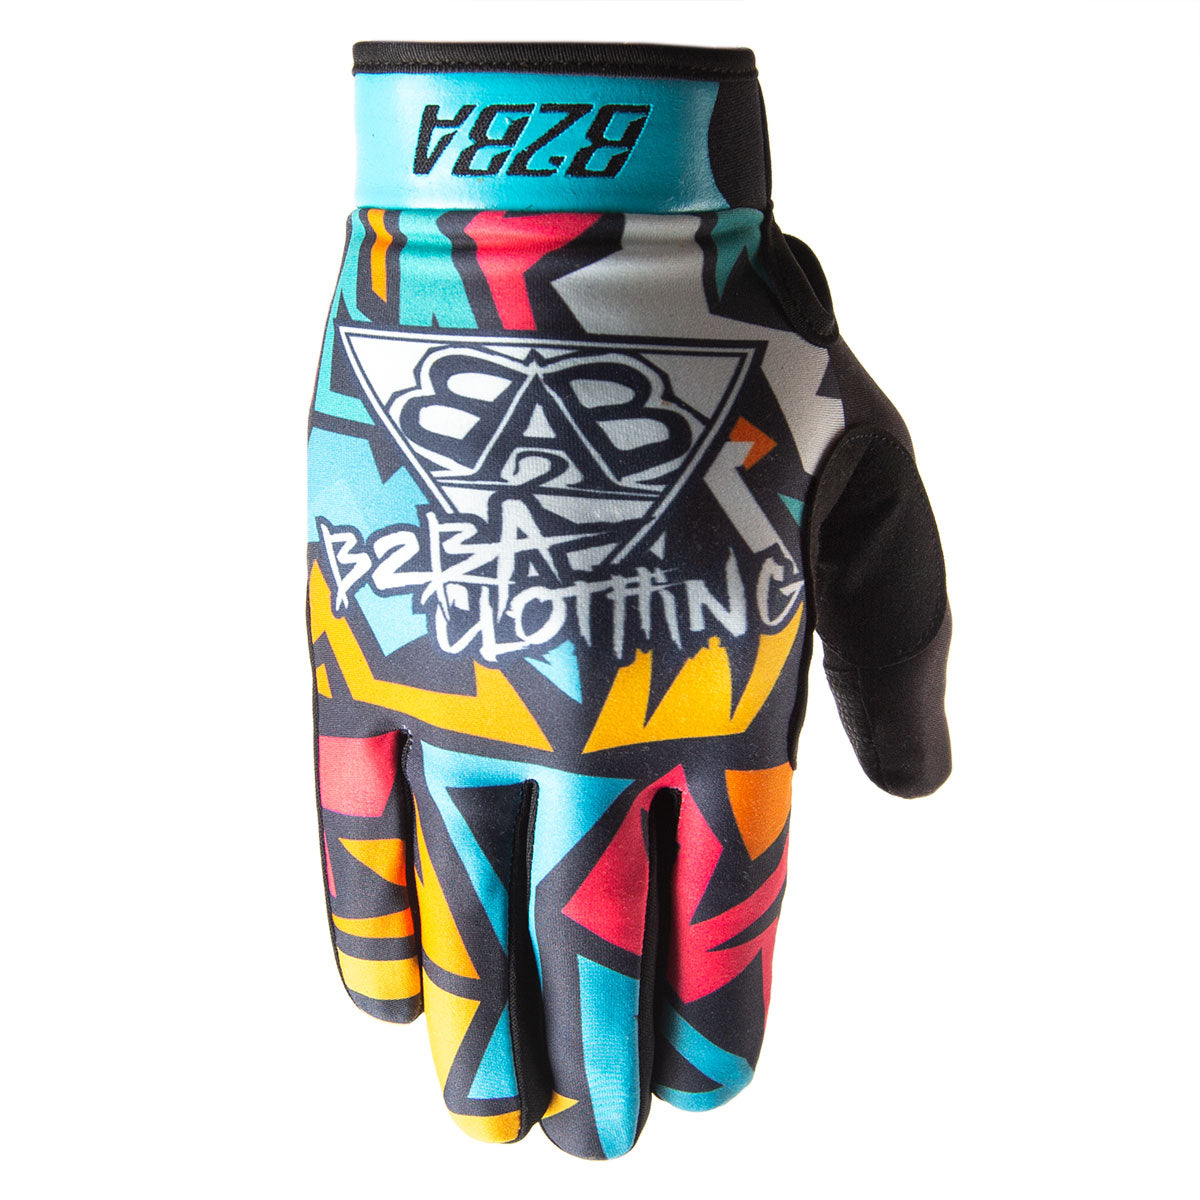 Maniac Race Glove Graffiti - B2BA Clothing multicolor / XXS